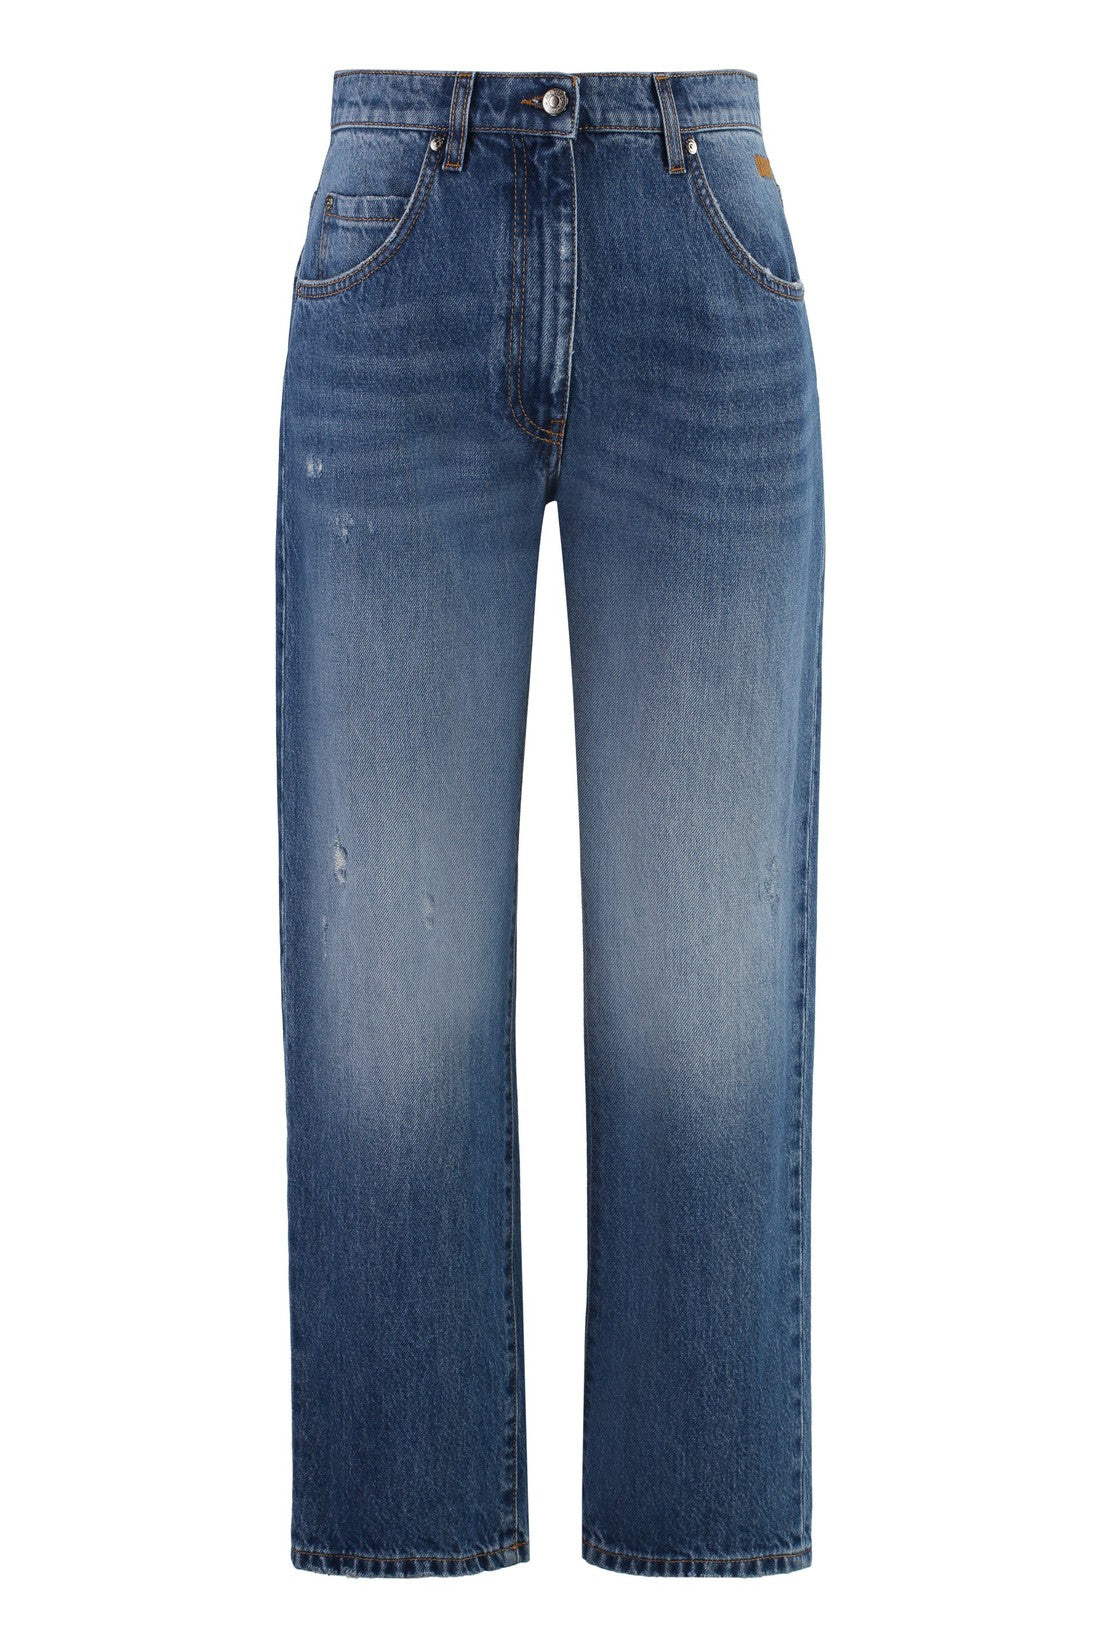 MSGM-OUTLET-SALE-Cropped jeans-ARCHIVIST